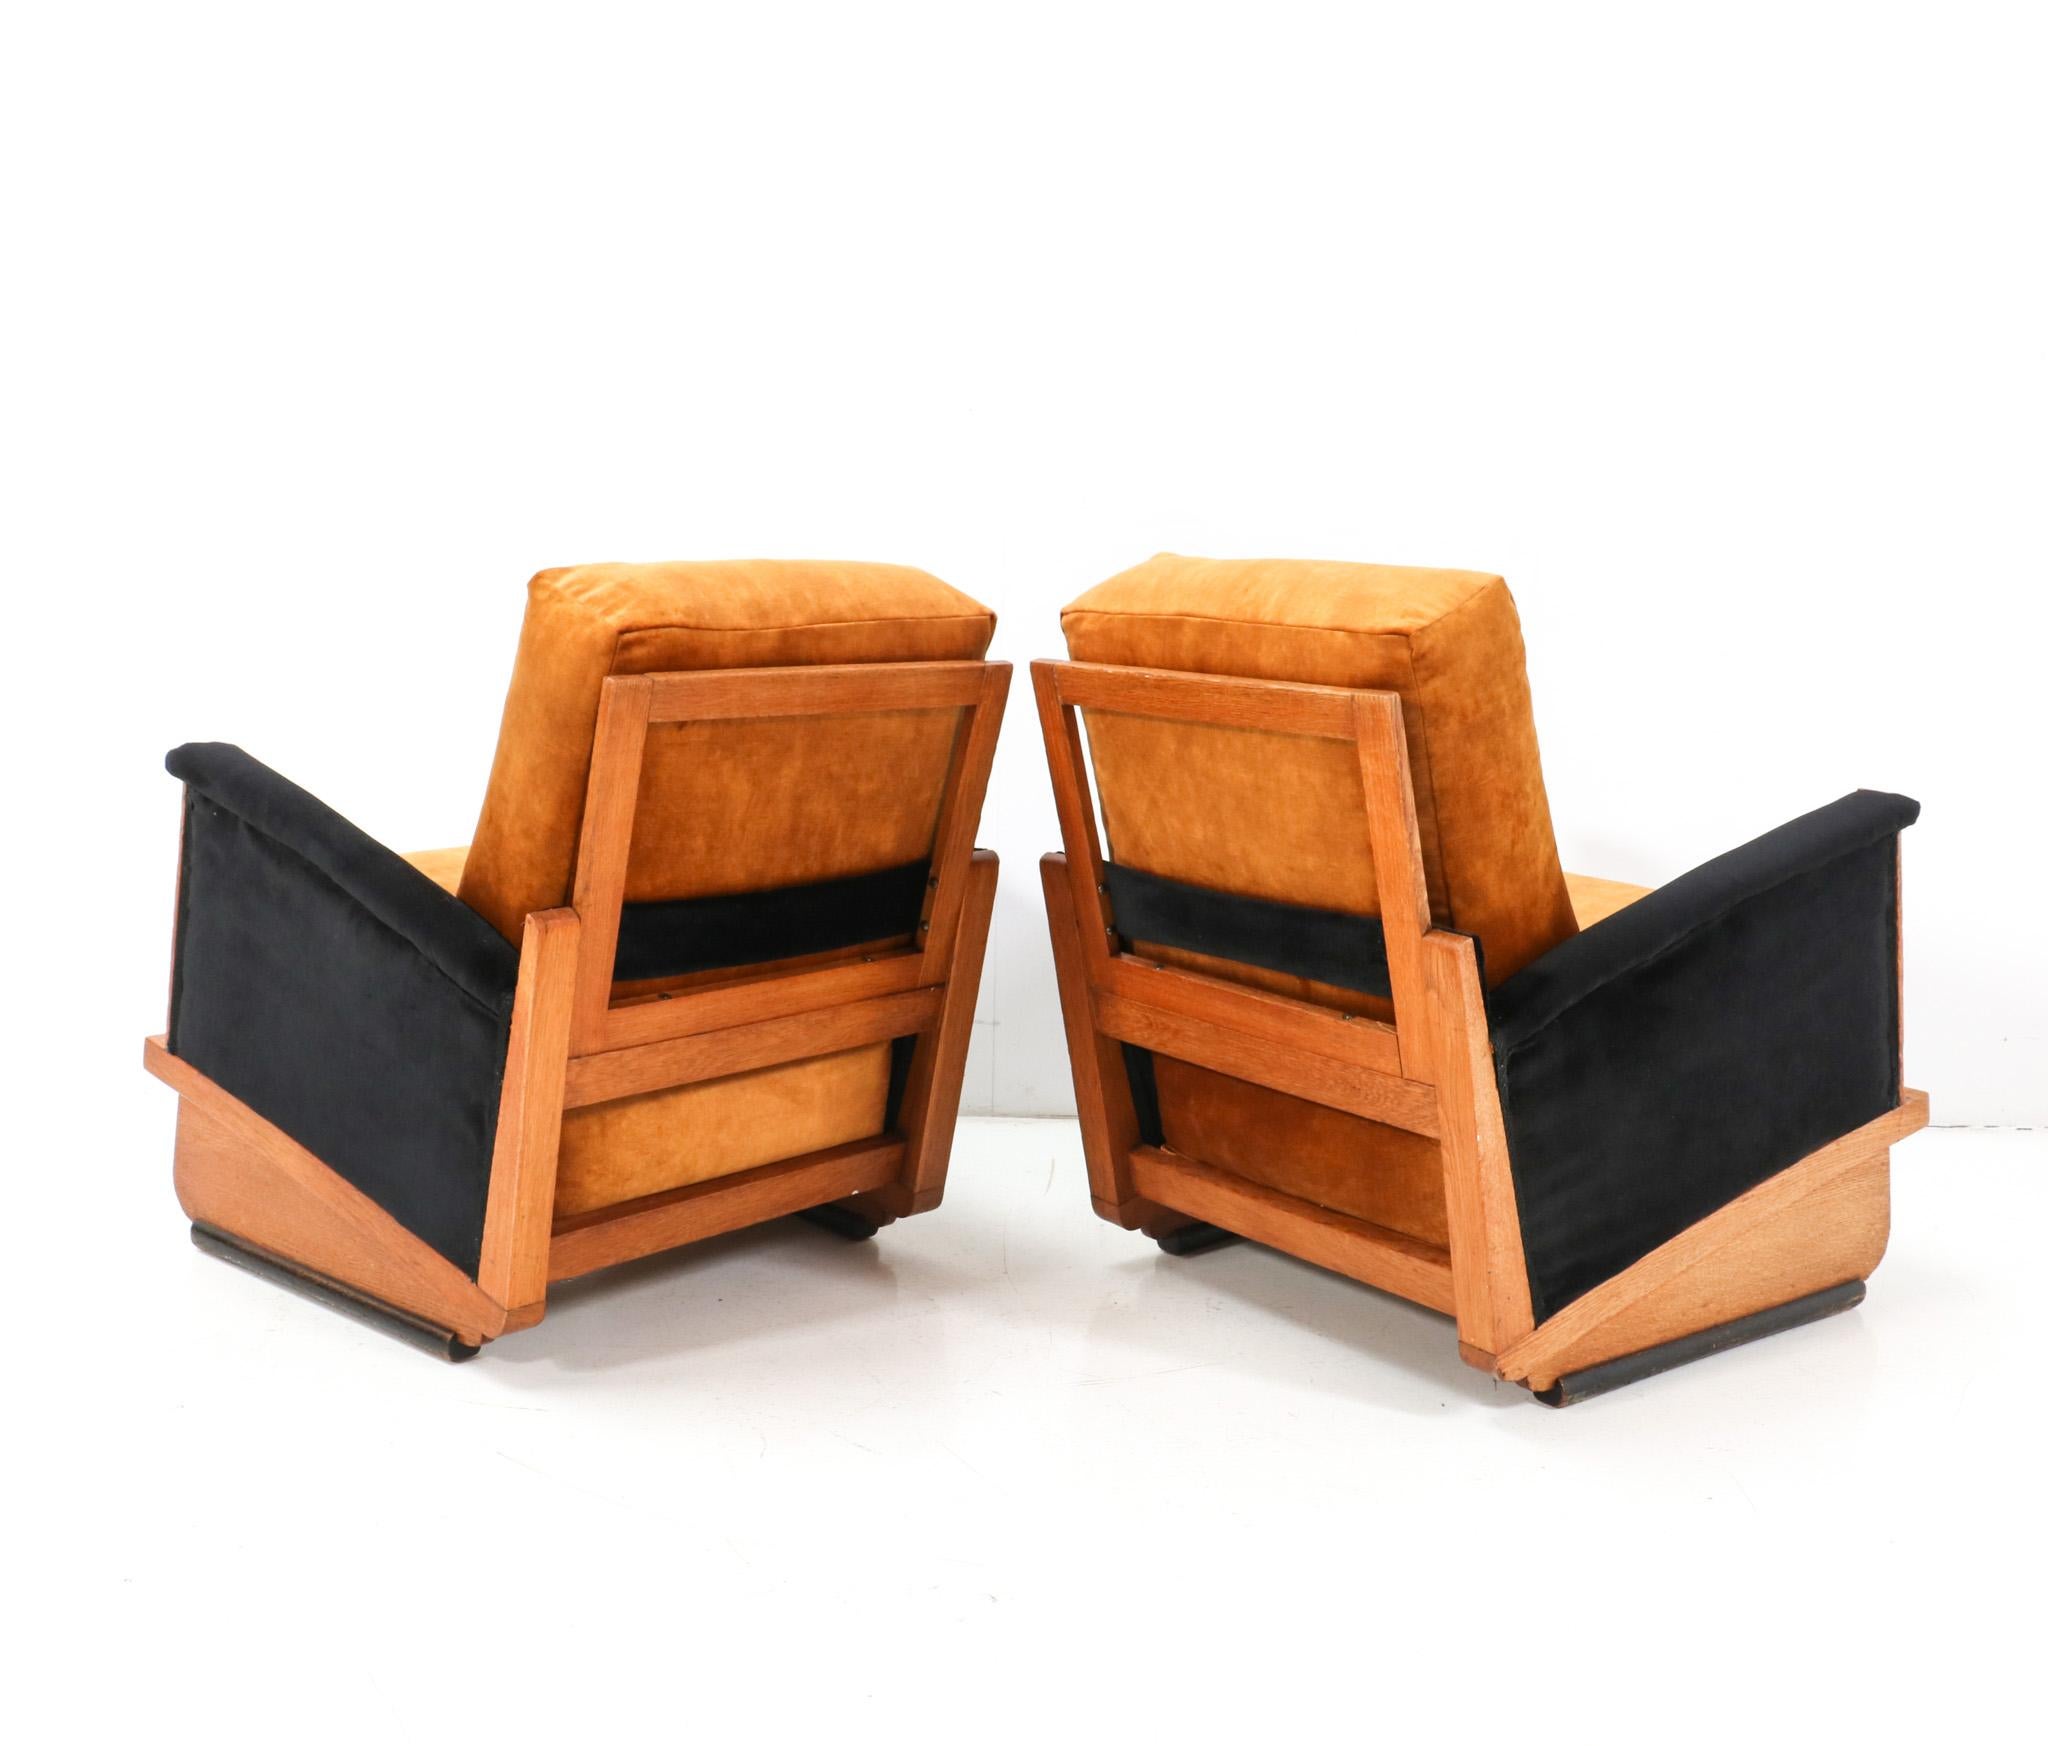 Two Oak Art Deco Modernist Lounge Chairs, 1920s 1